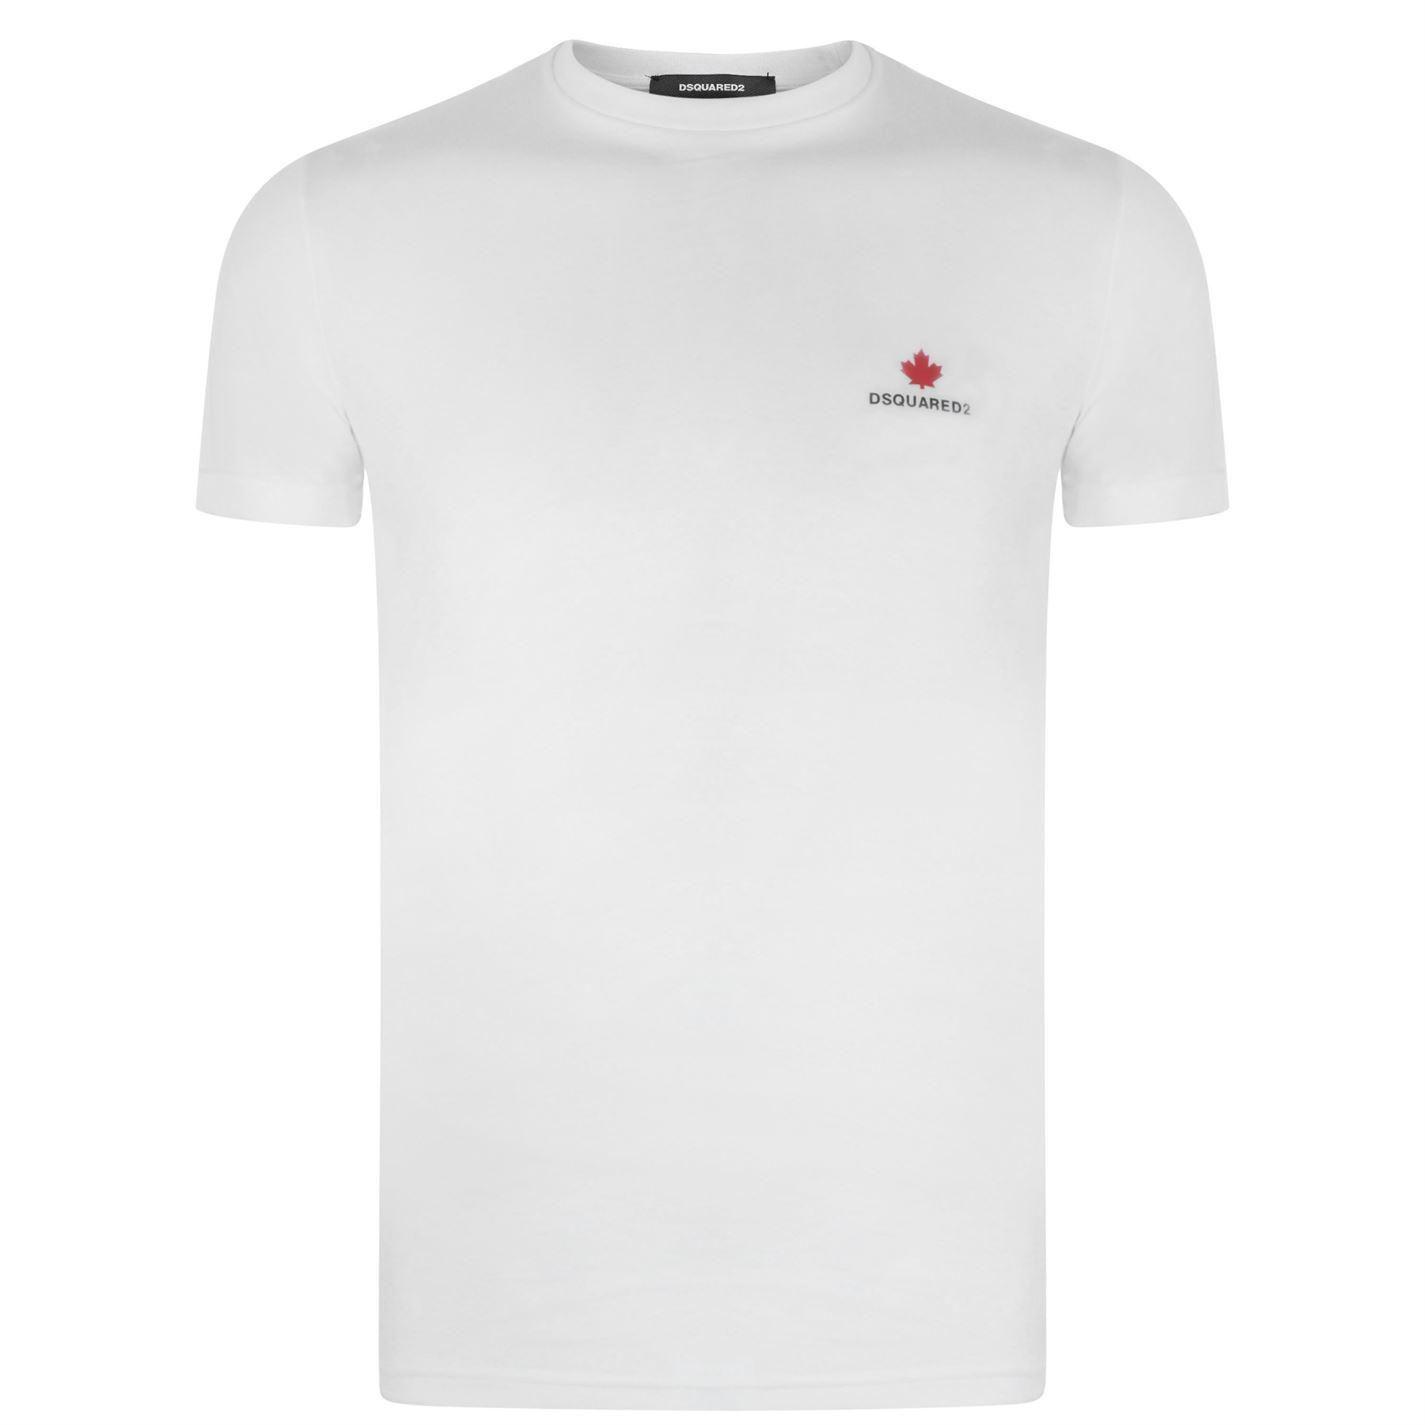 White Leaf Logo - DSquared² Leaf Logo T Shirt in White for Men - Lyst